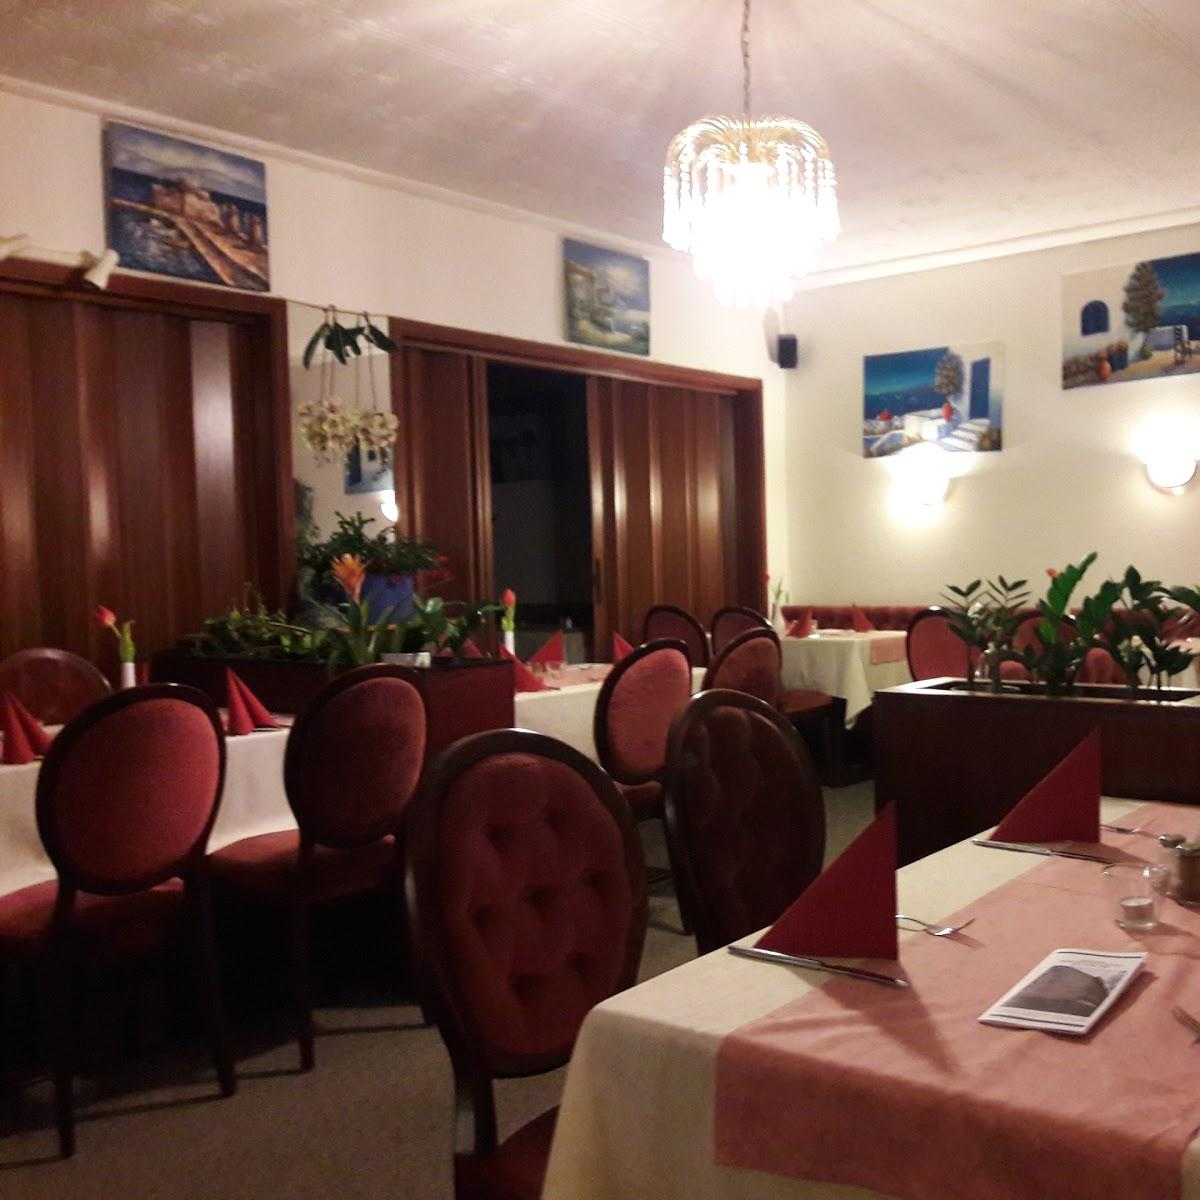 Restaurant "Restaurant Lindenhof" in Bobingen